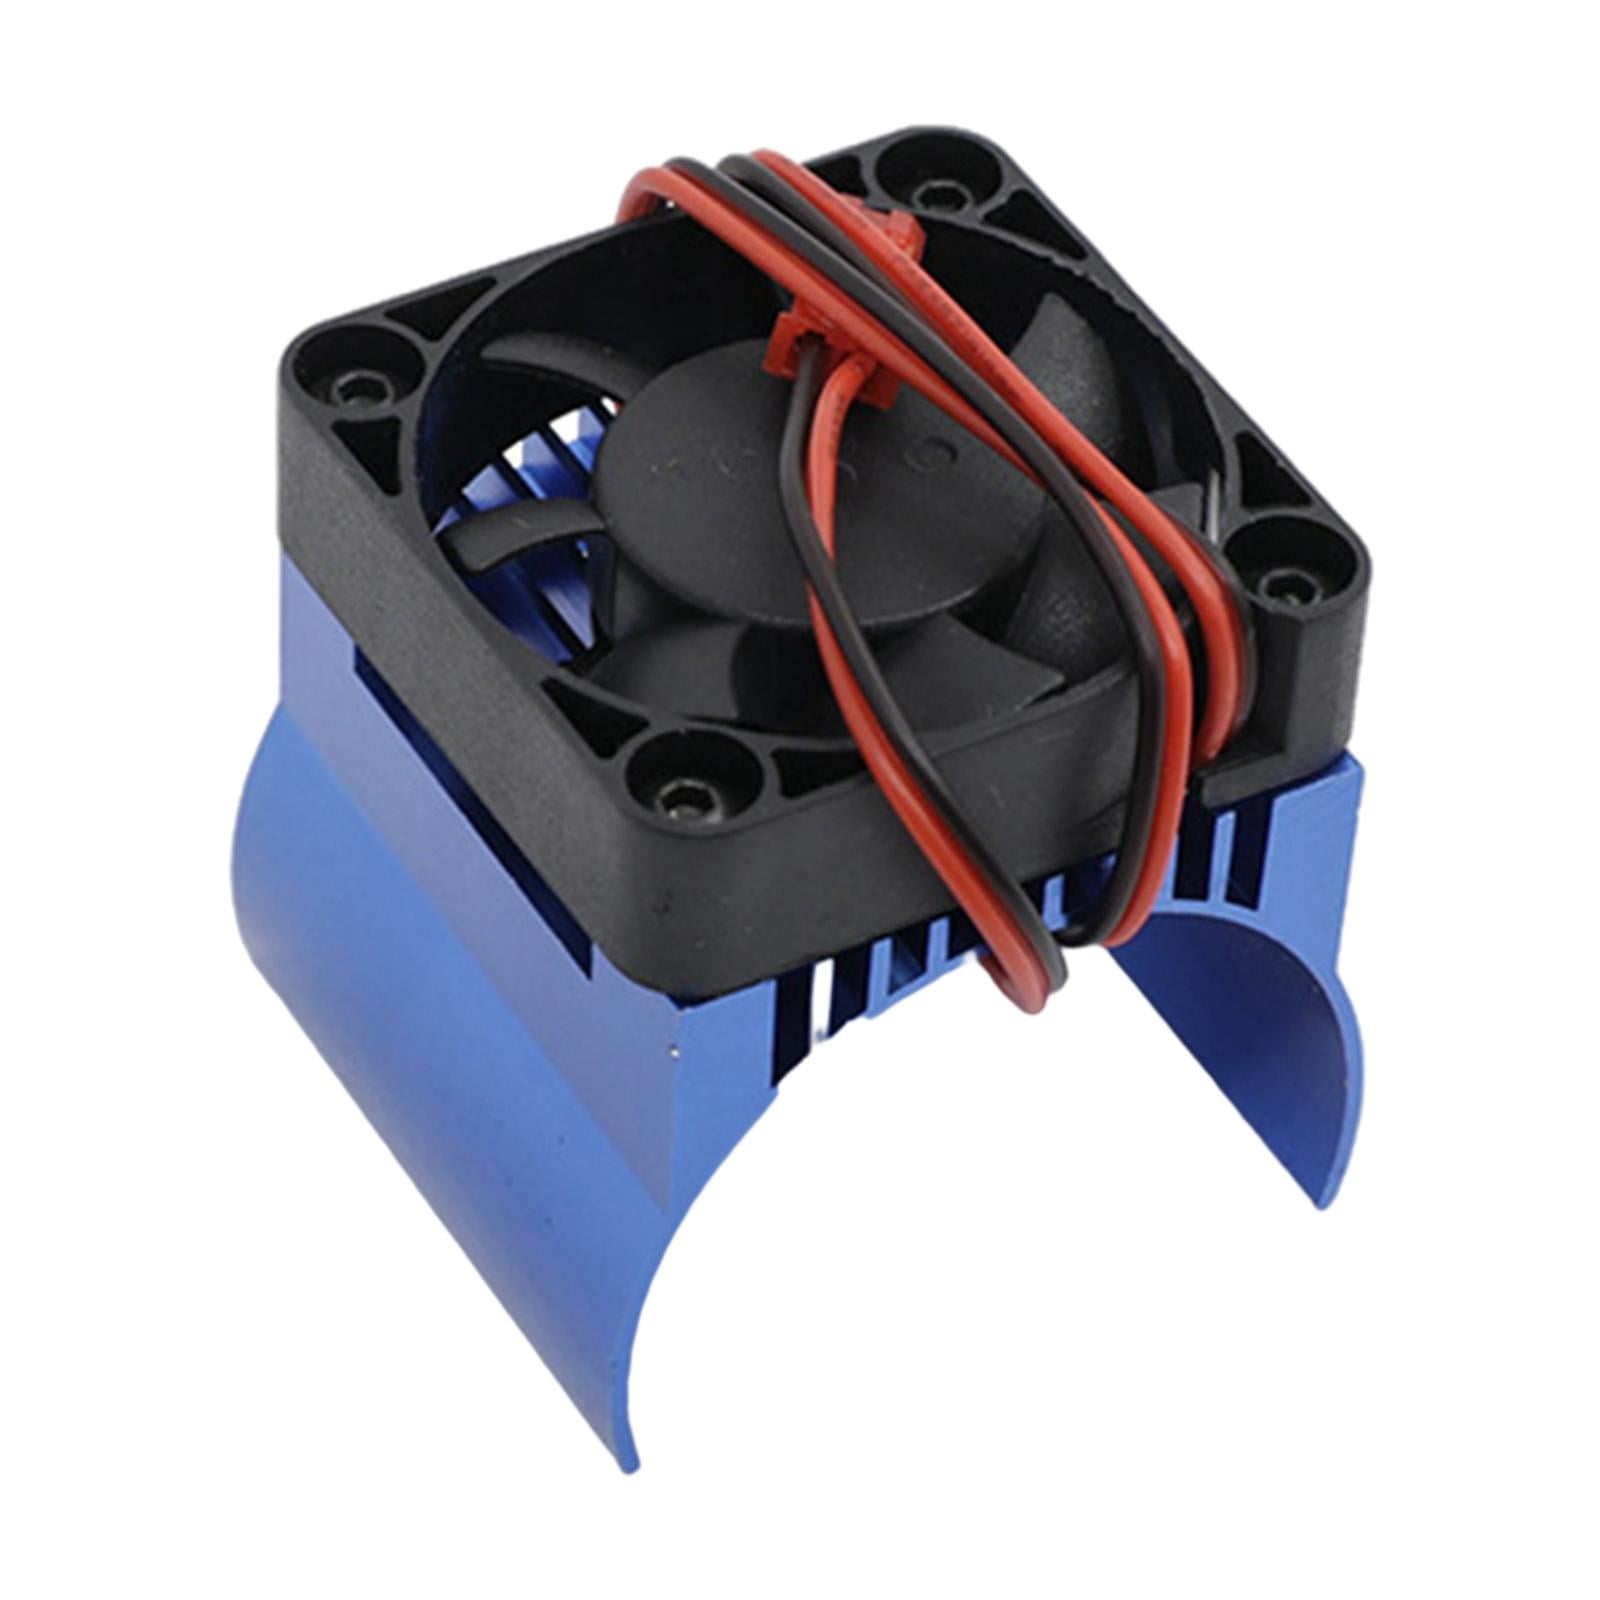 Yiju 42mm Motor Heat Sink 4274 4282 Motor Replace Parts Radiator Cooling Fan for Arrma Talion Typhonrc Model Car Upgrade Parts Black 